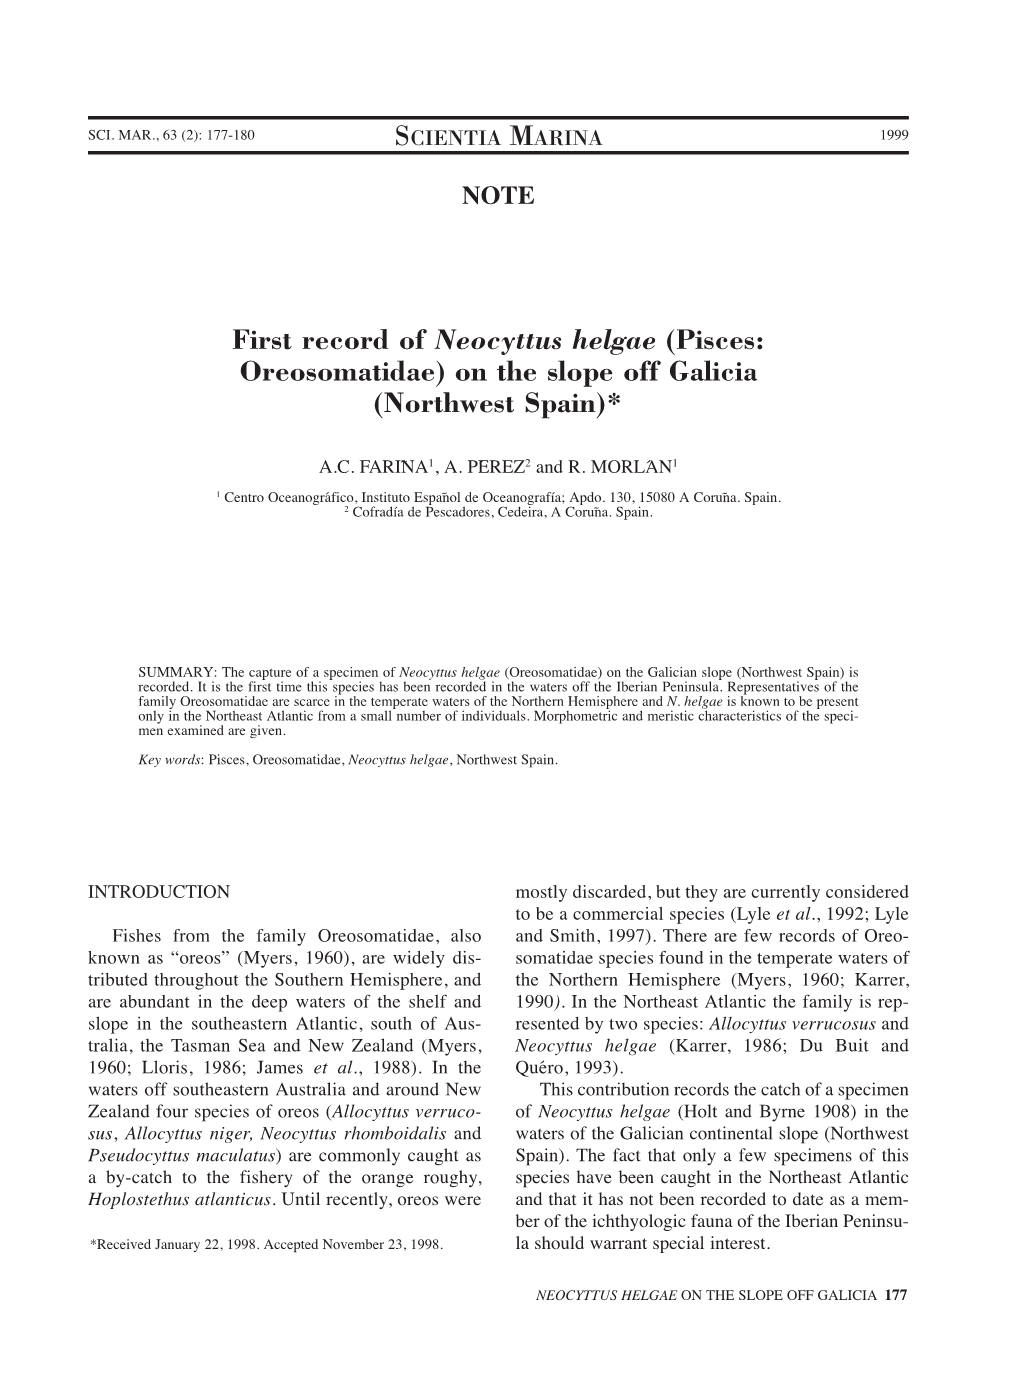 First Record of Neocyttus Helgae (Pisces: Oreosomatidae) on the Slope Off Galicia (Northwest Spain)*